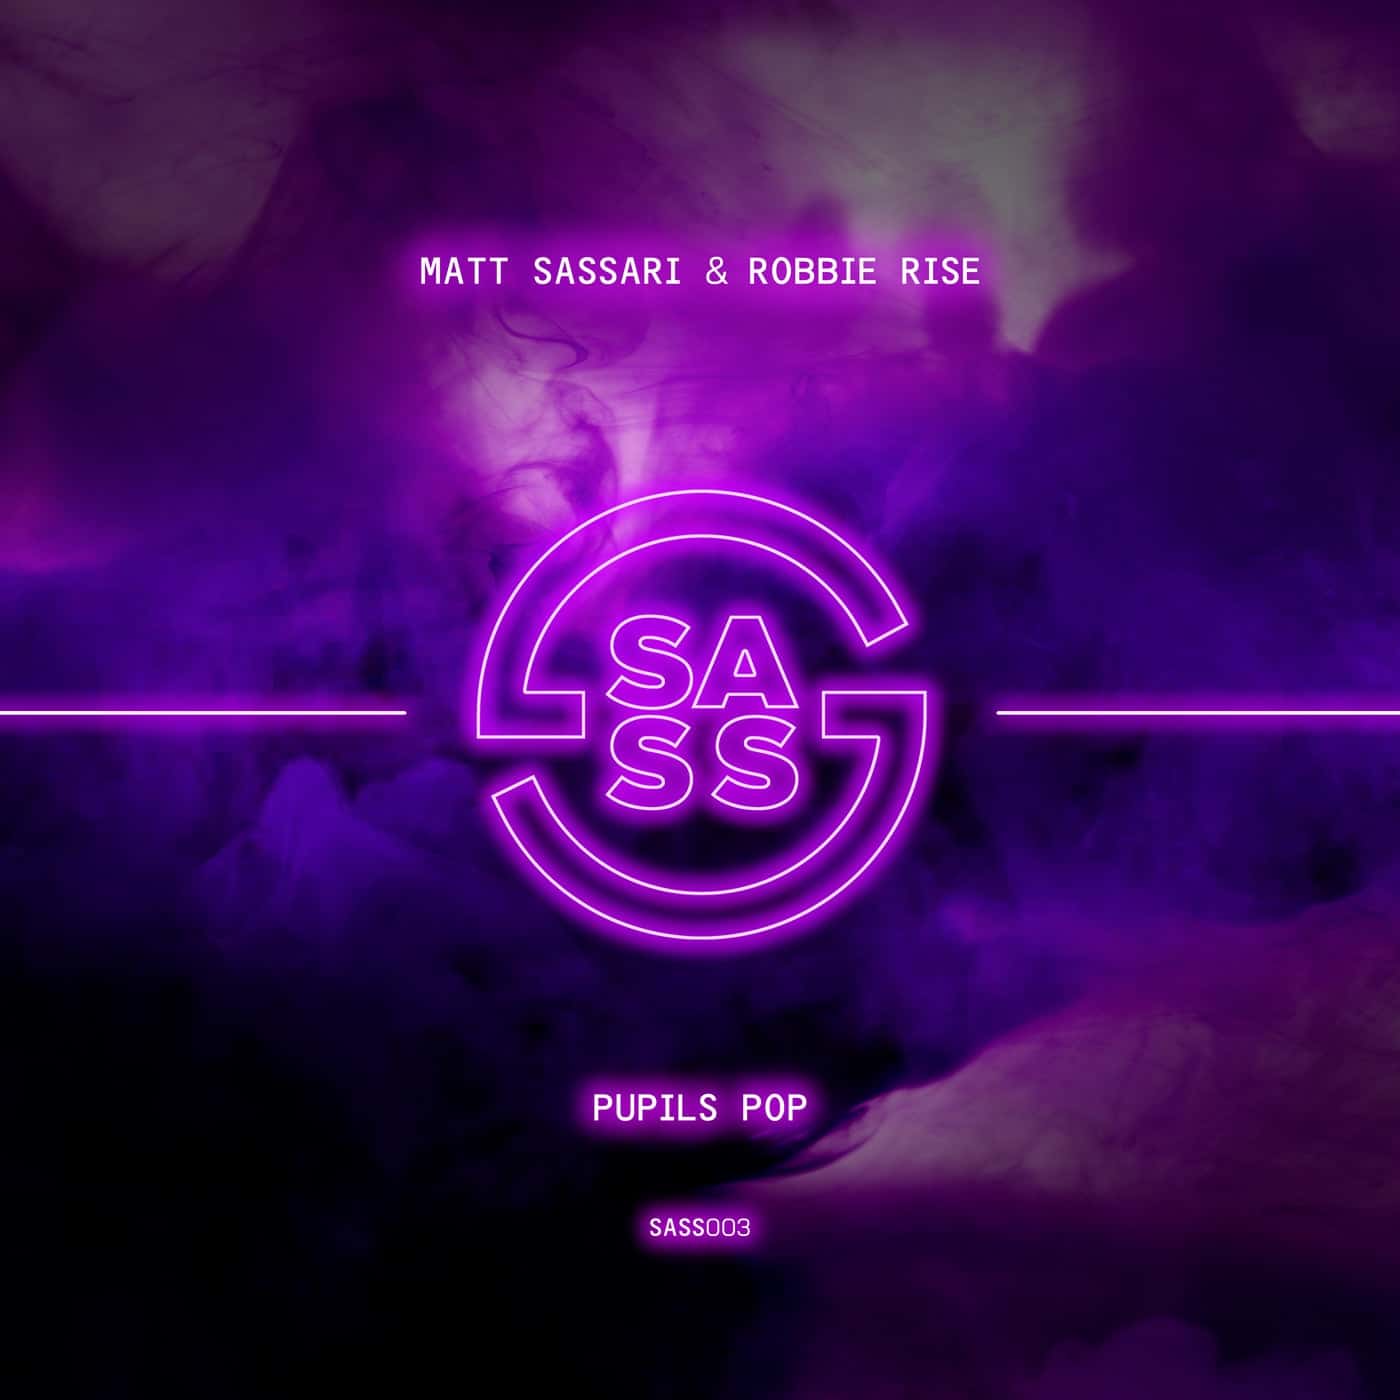 image cover: Matt Sassari, Robbie Rise - Pupils Pop on SASS